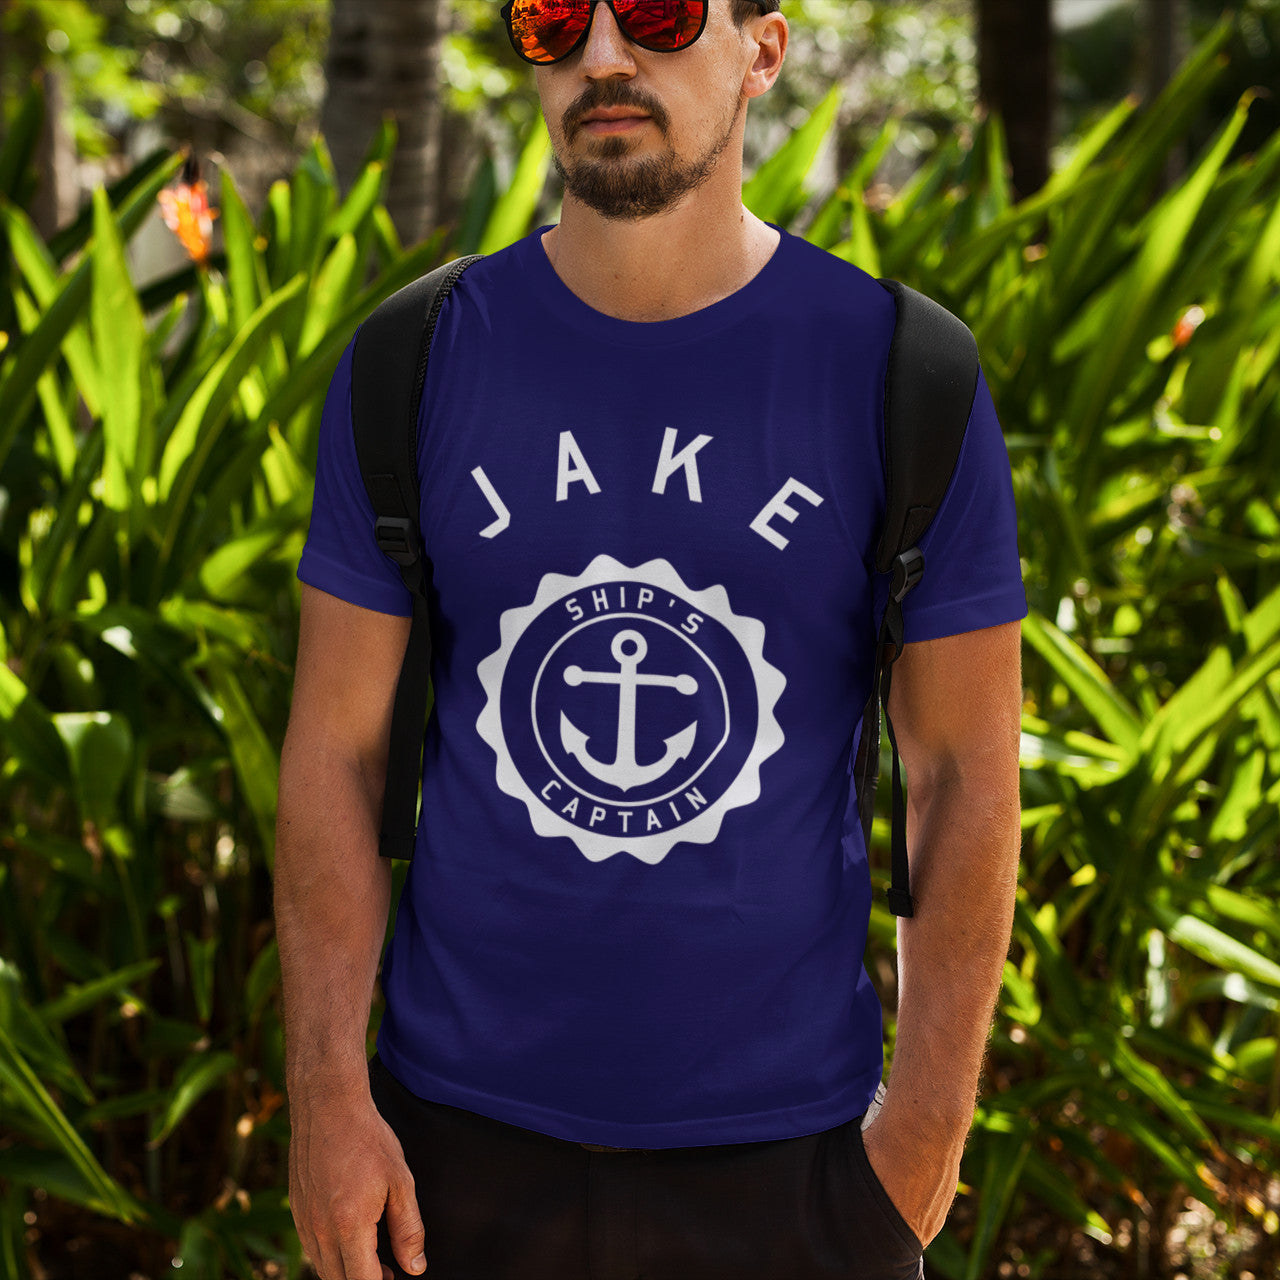 Man wearing ship's captain personalised navy cotton crewneck t-shirt